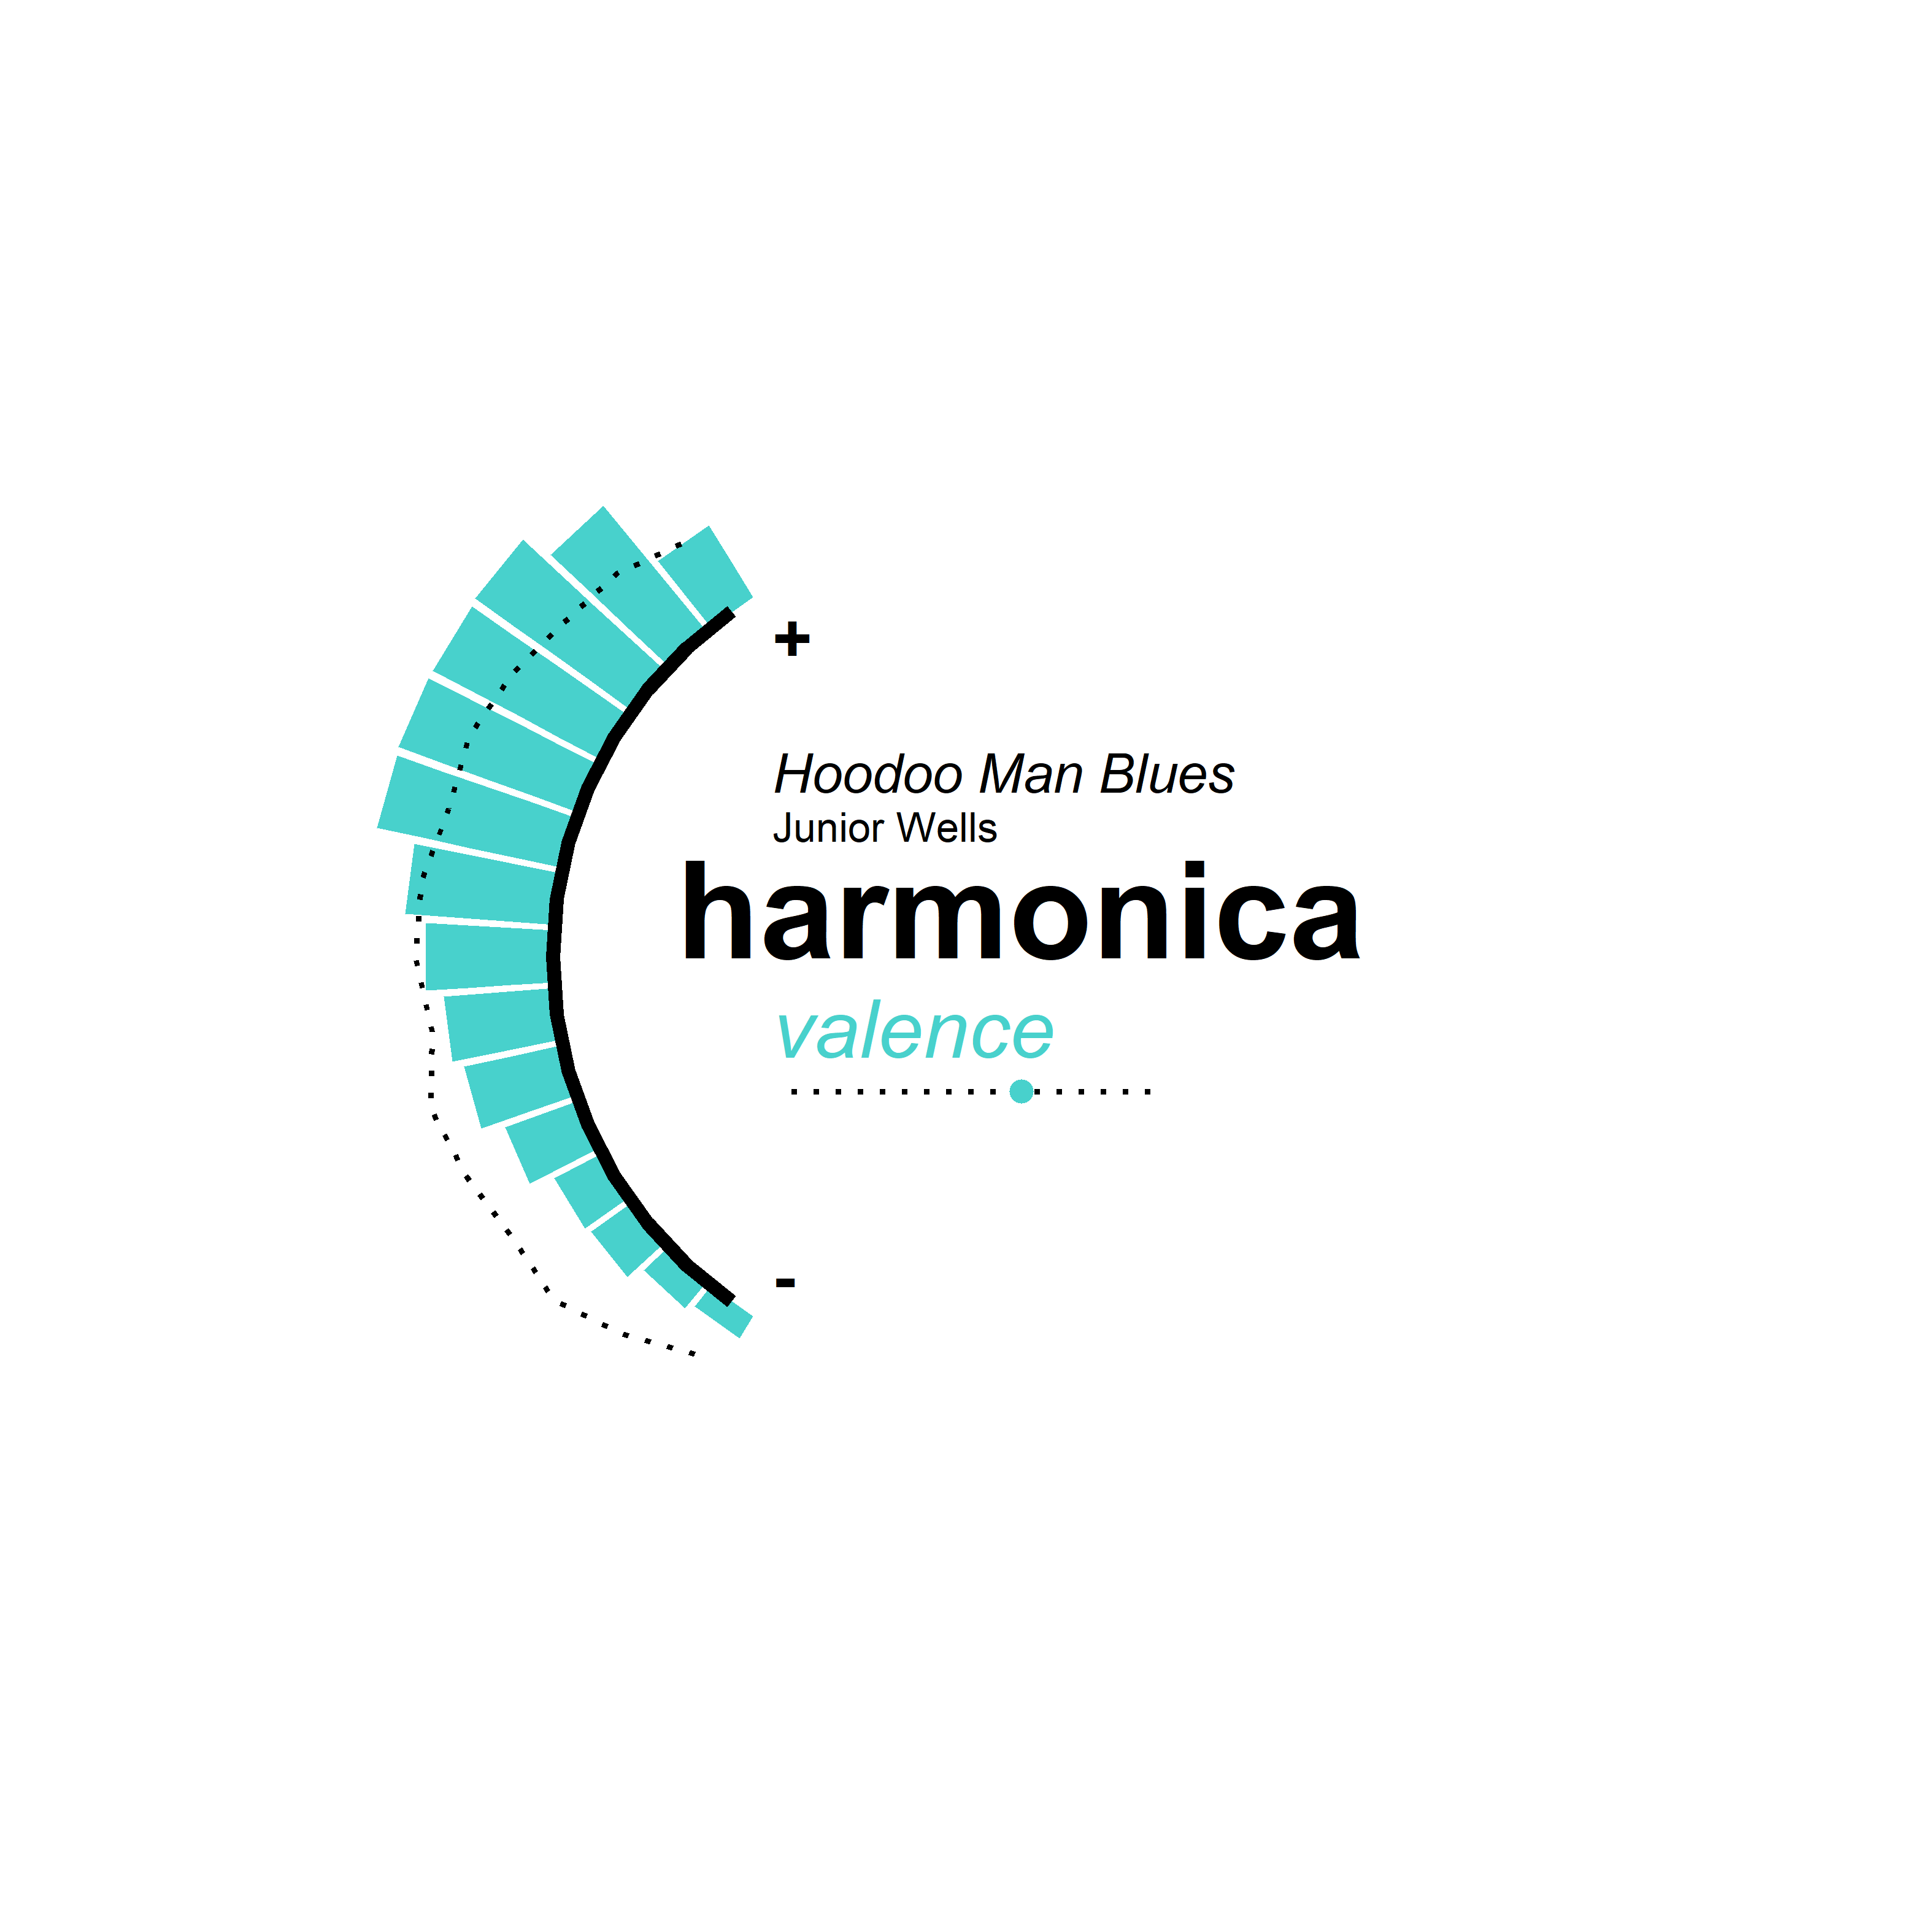 Harmonica music scores high on valence.